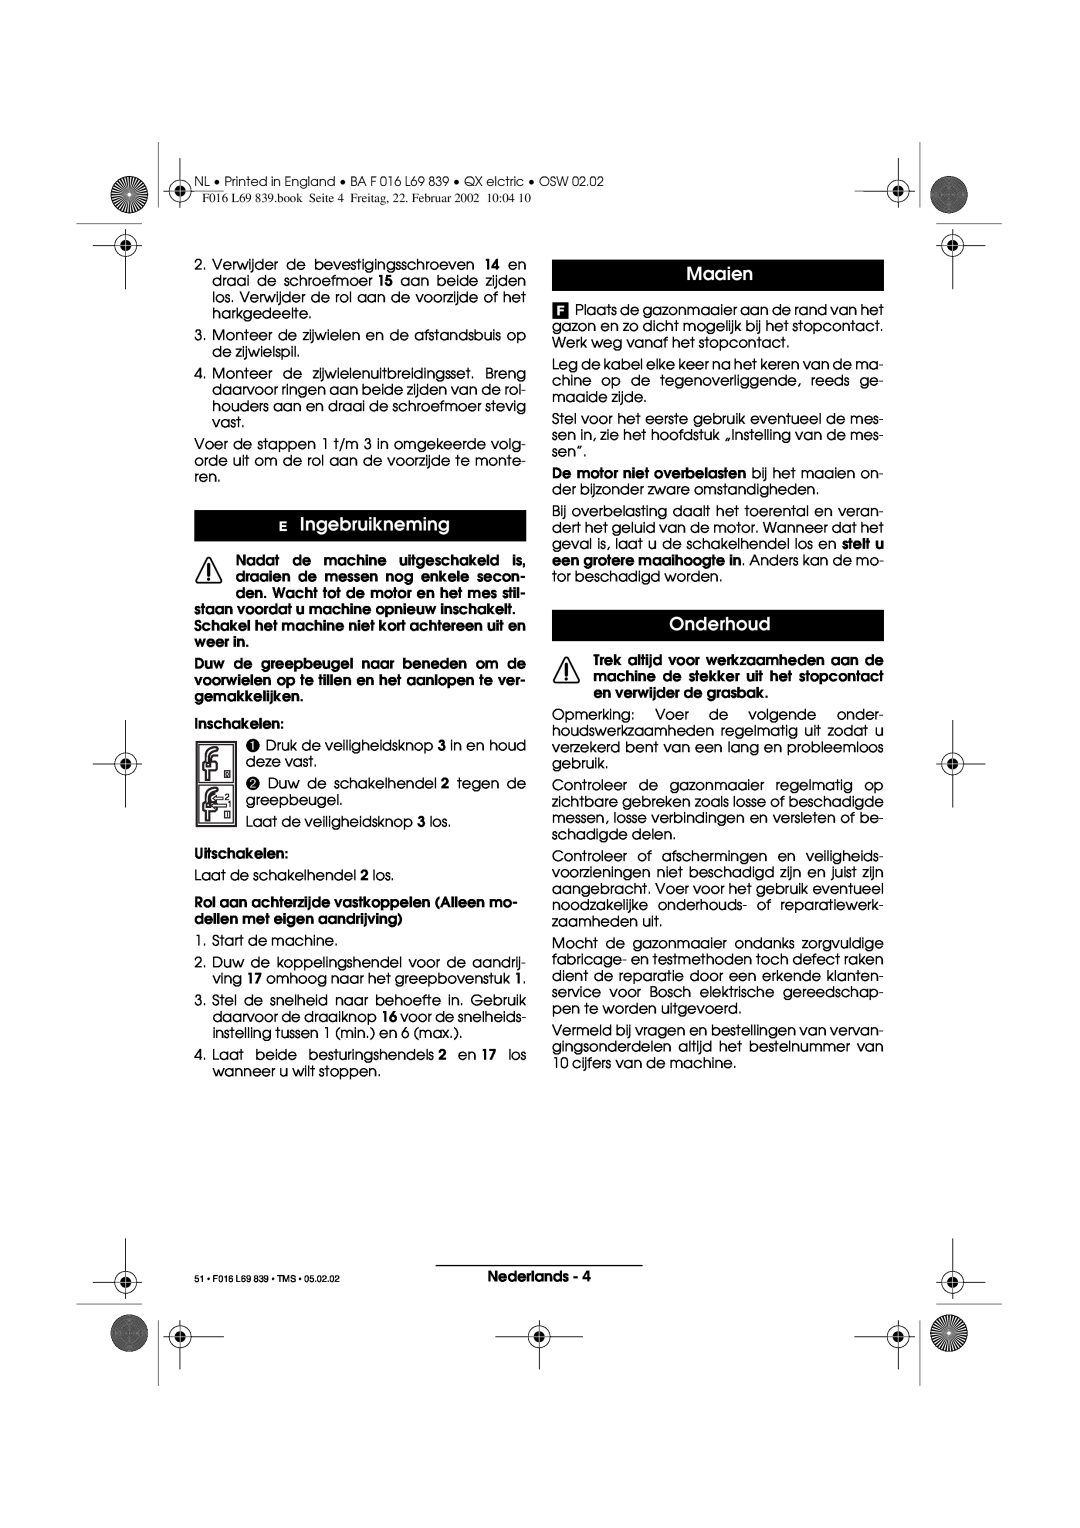 Atco QX operating instructions E Ingebruikneming, Maaien, Onderhoud, 51 F016 L69 839 TMS 